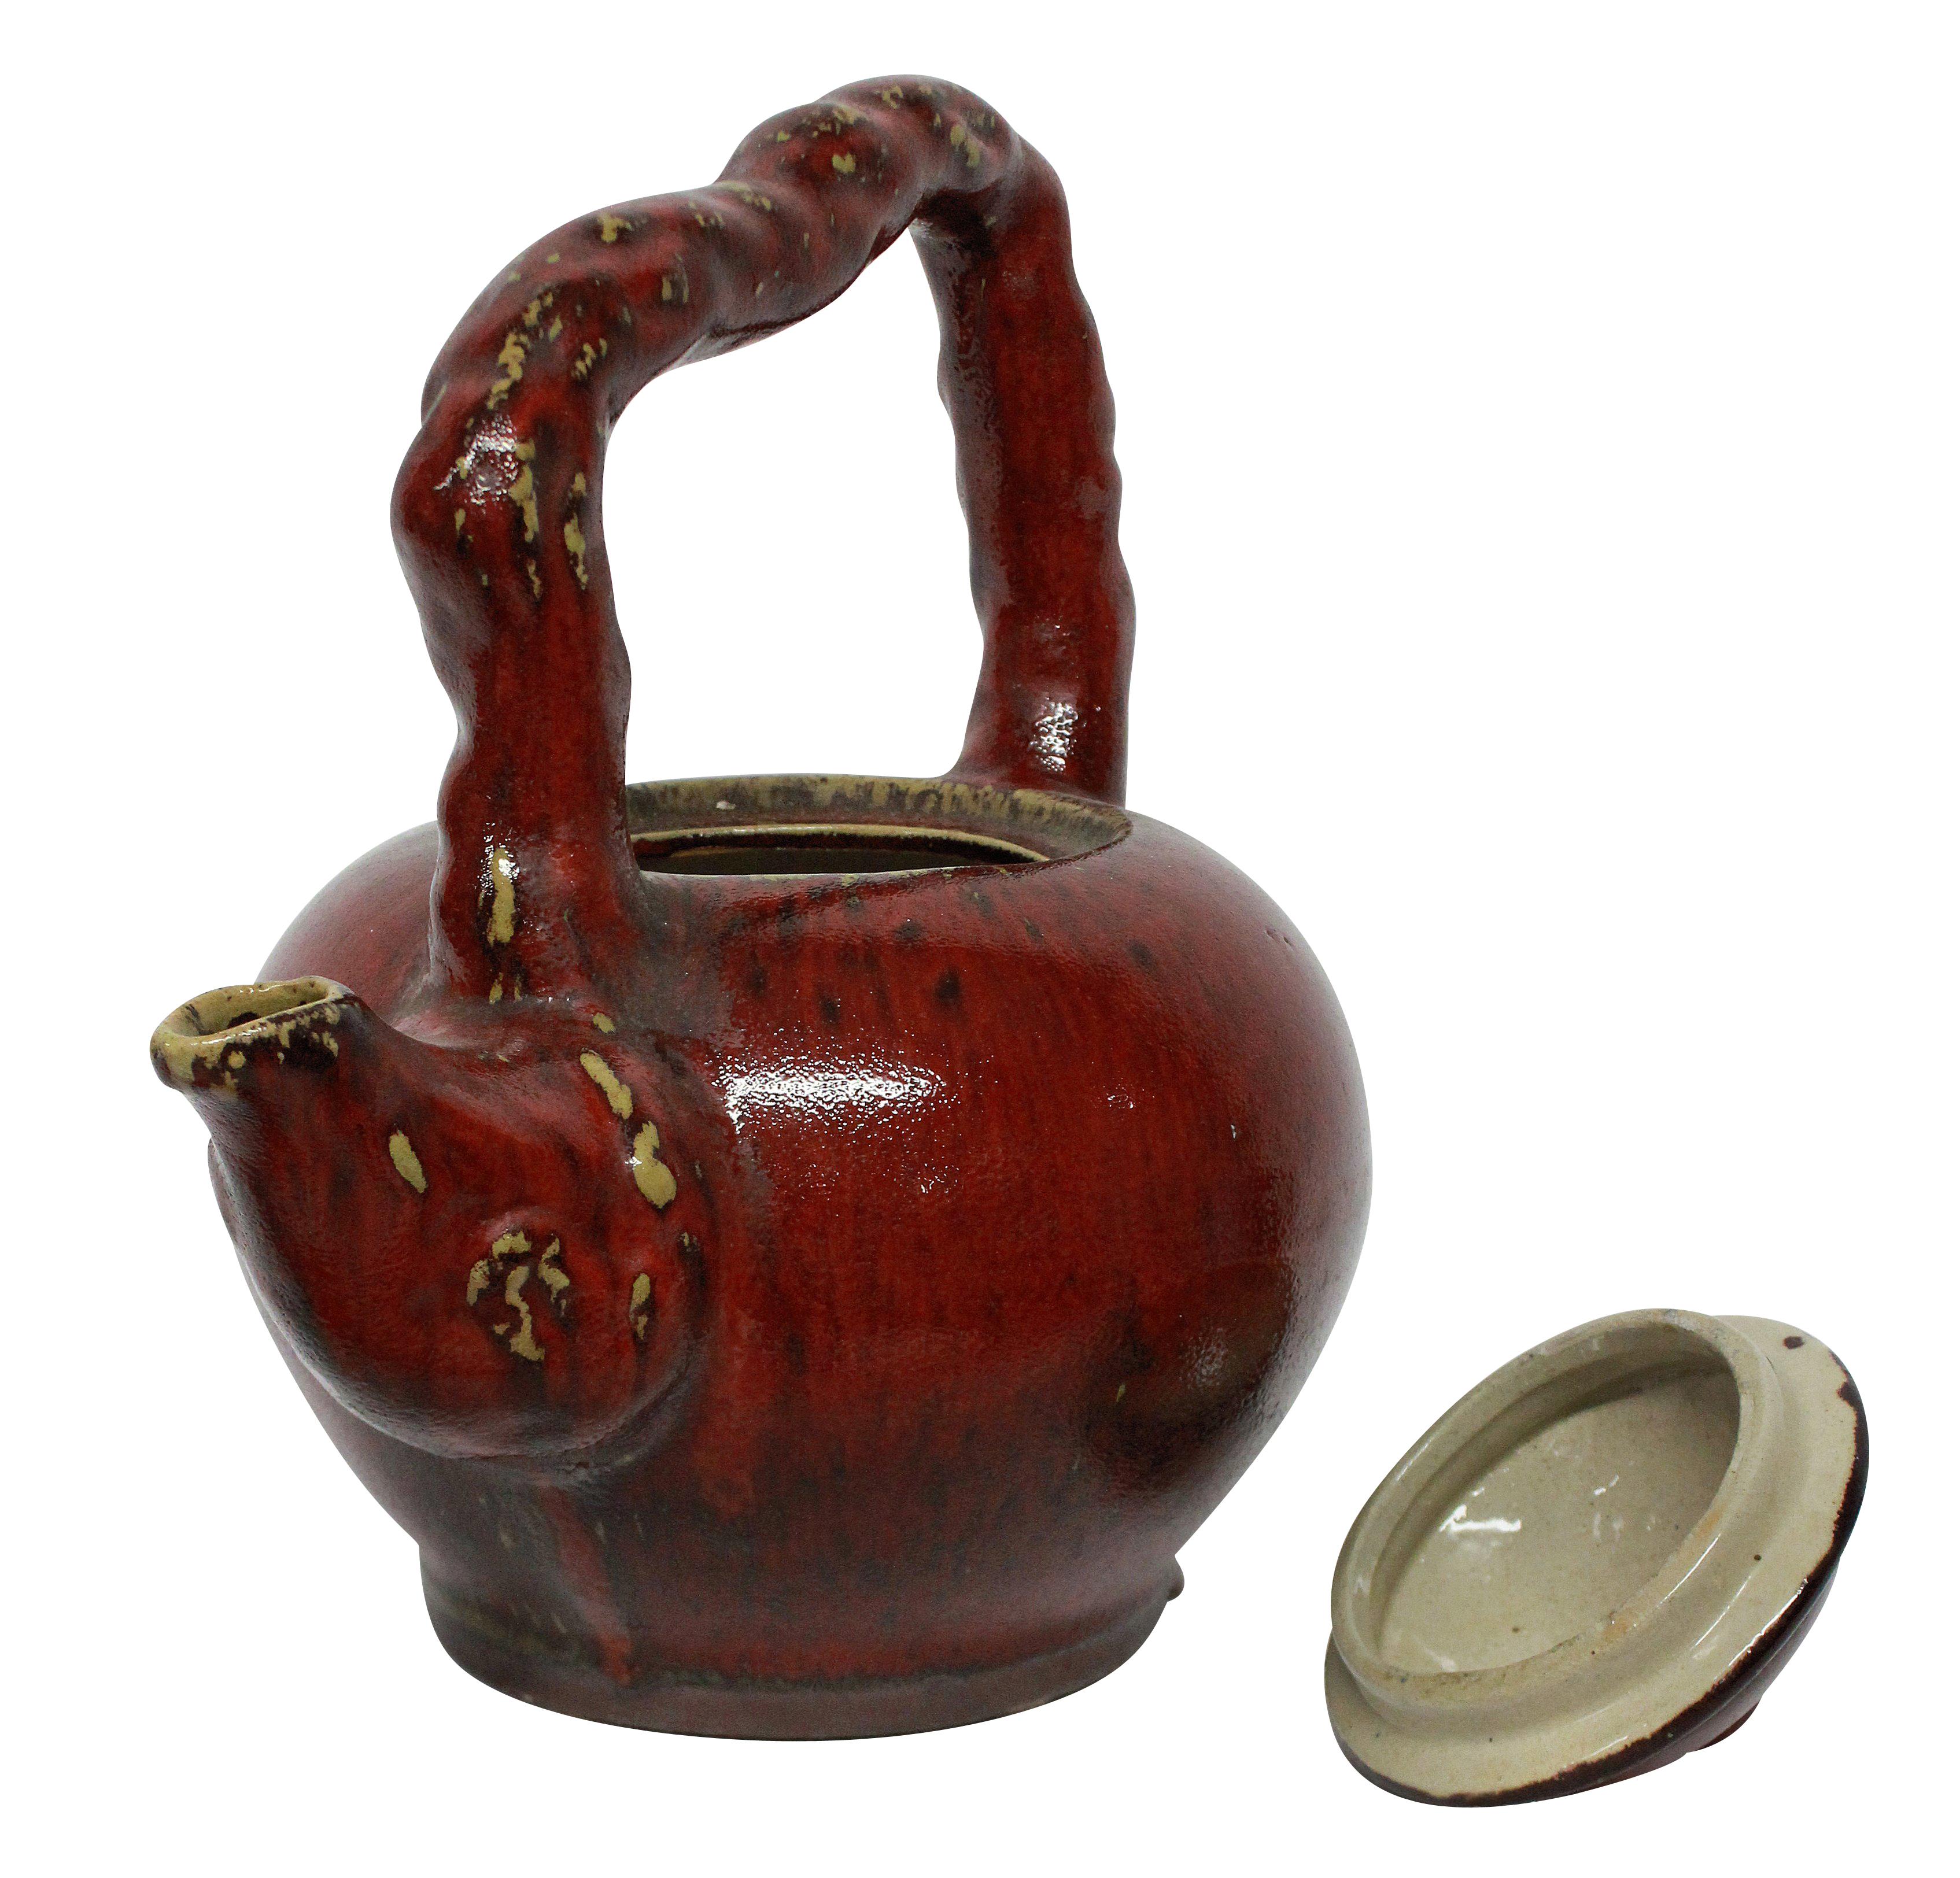 A large ornamental Japanese ceramic teapot with a sangue de boeuf glaze.